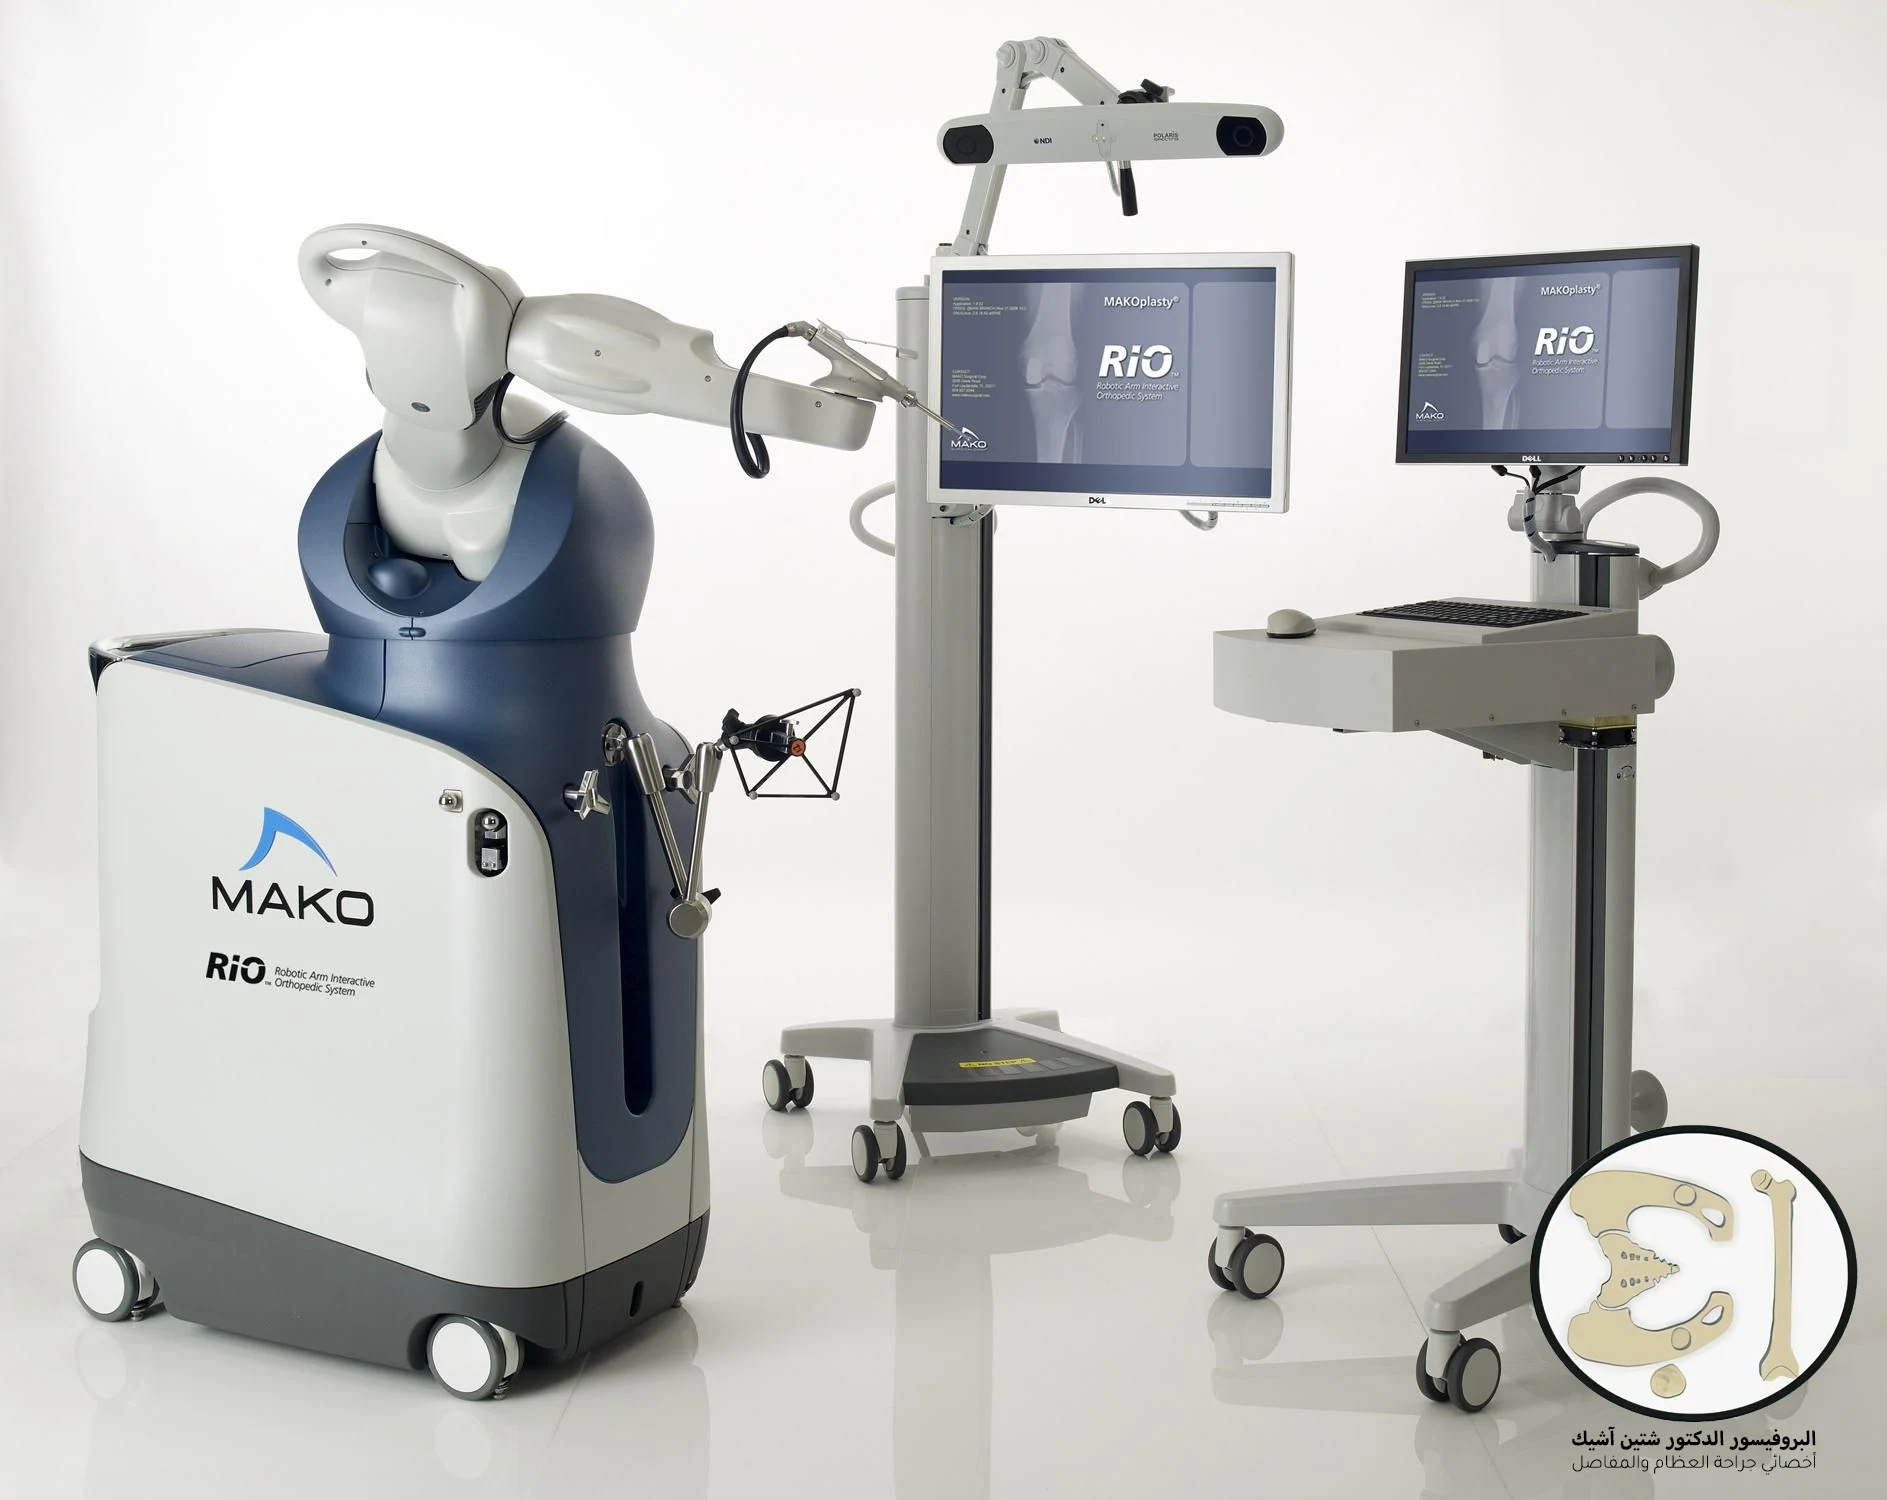 Image showing the Mako robot